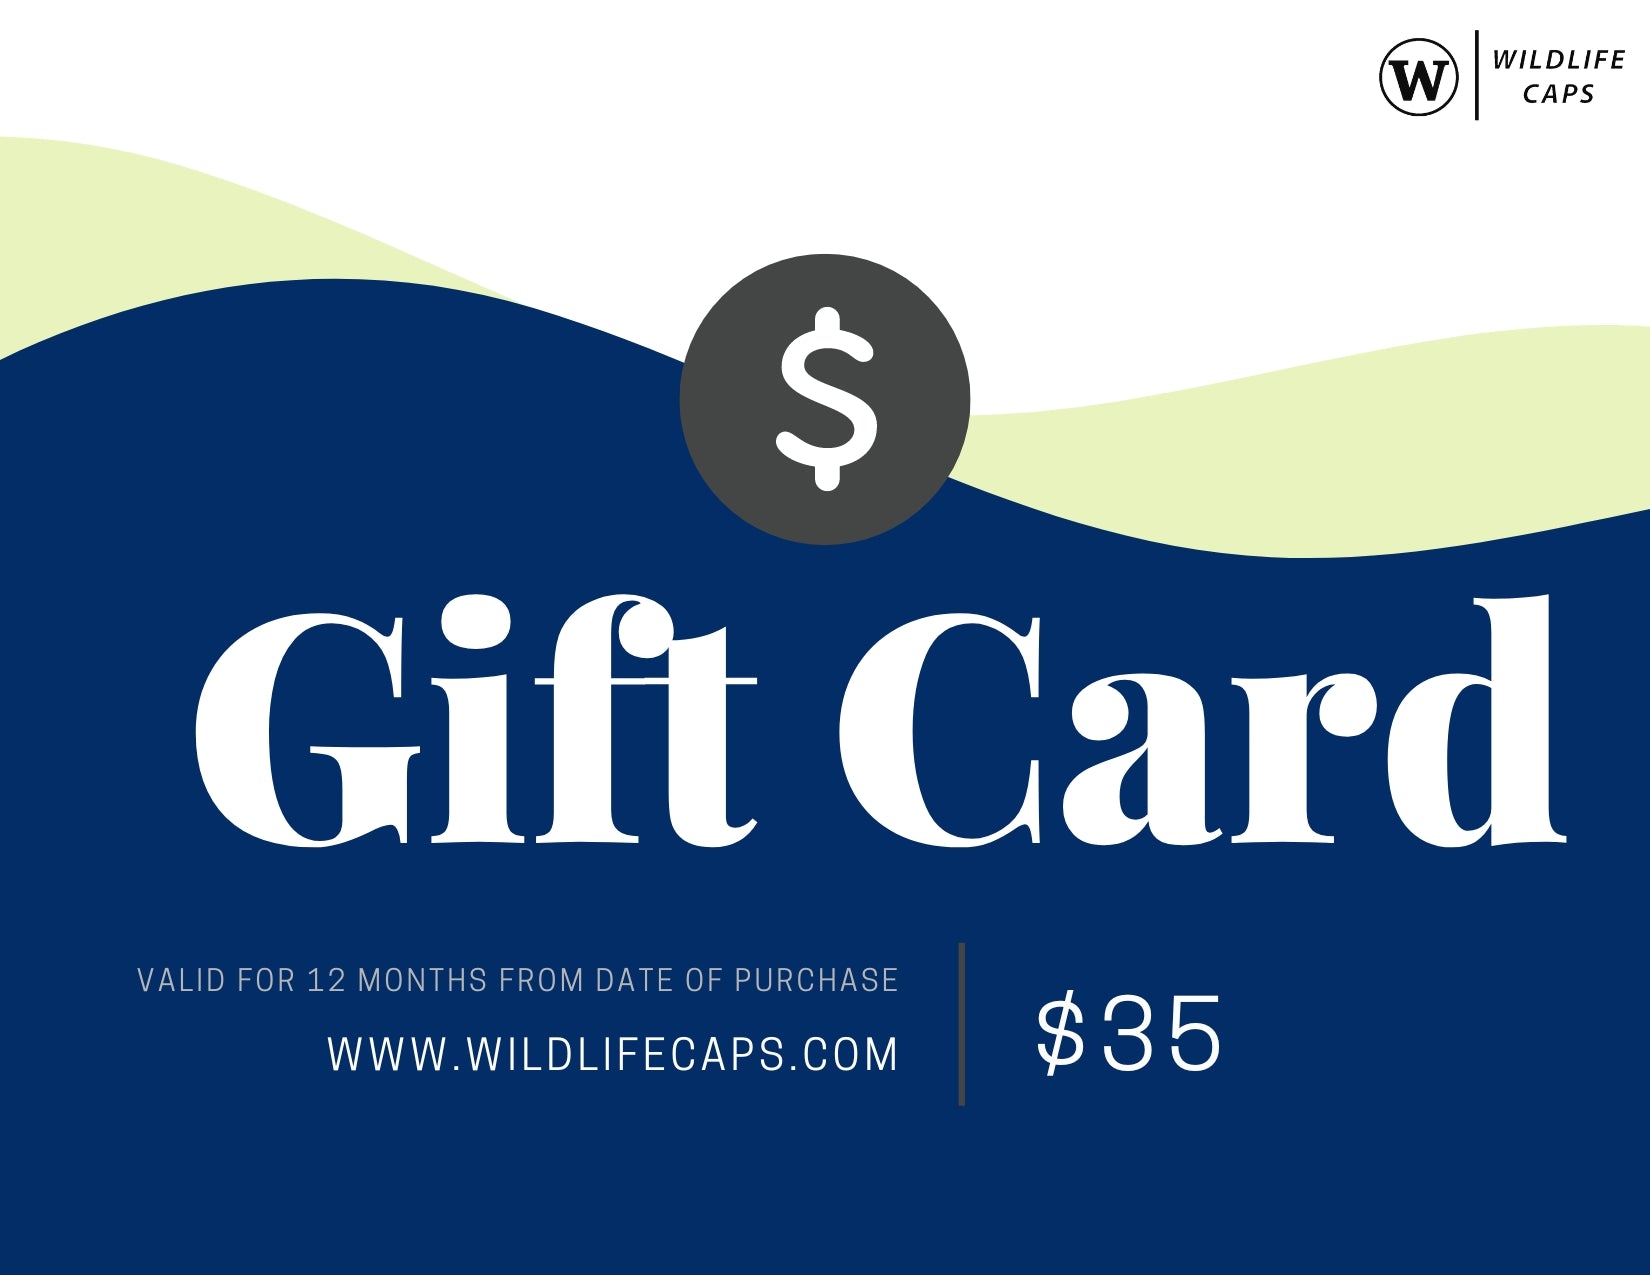 WILDLIFE CAPS Gift Card - WILDLIFE CAPS